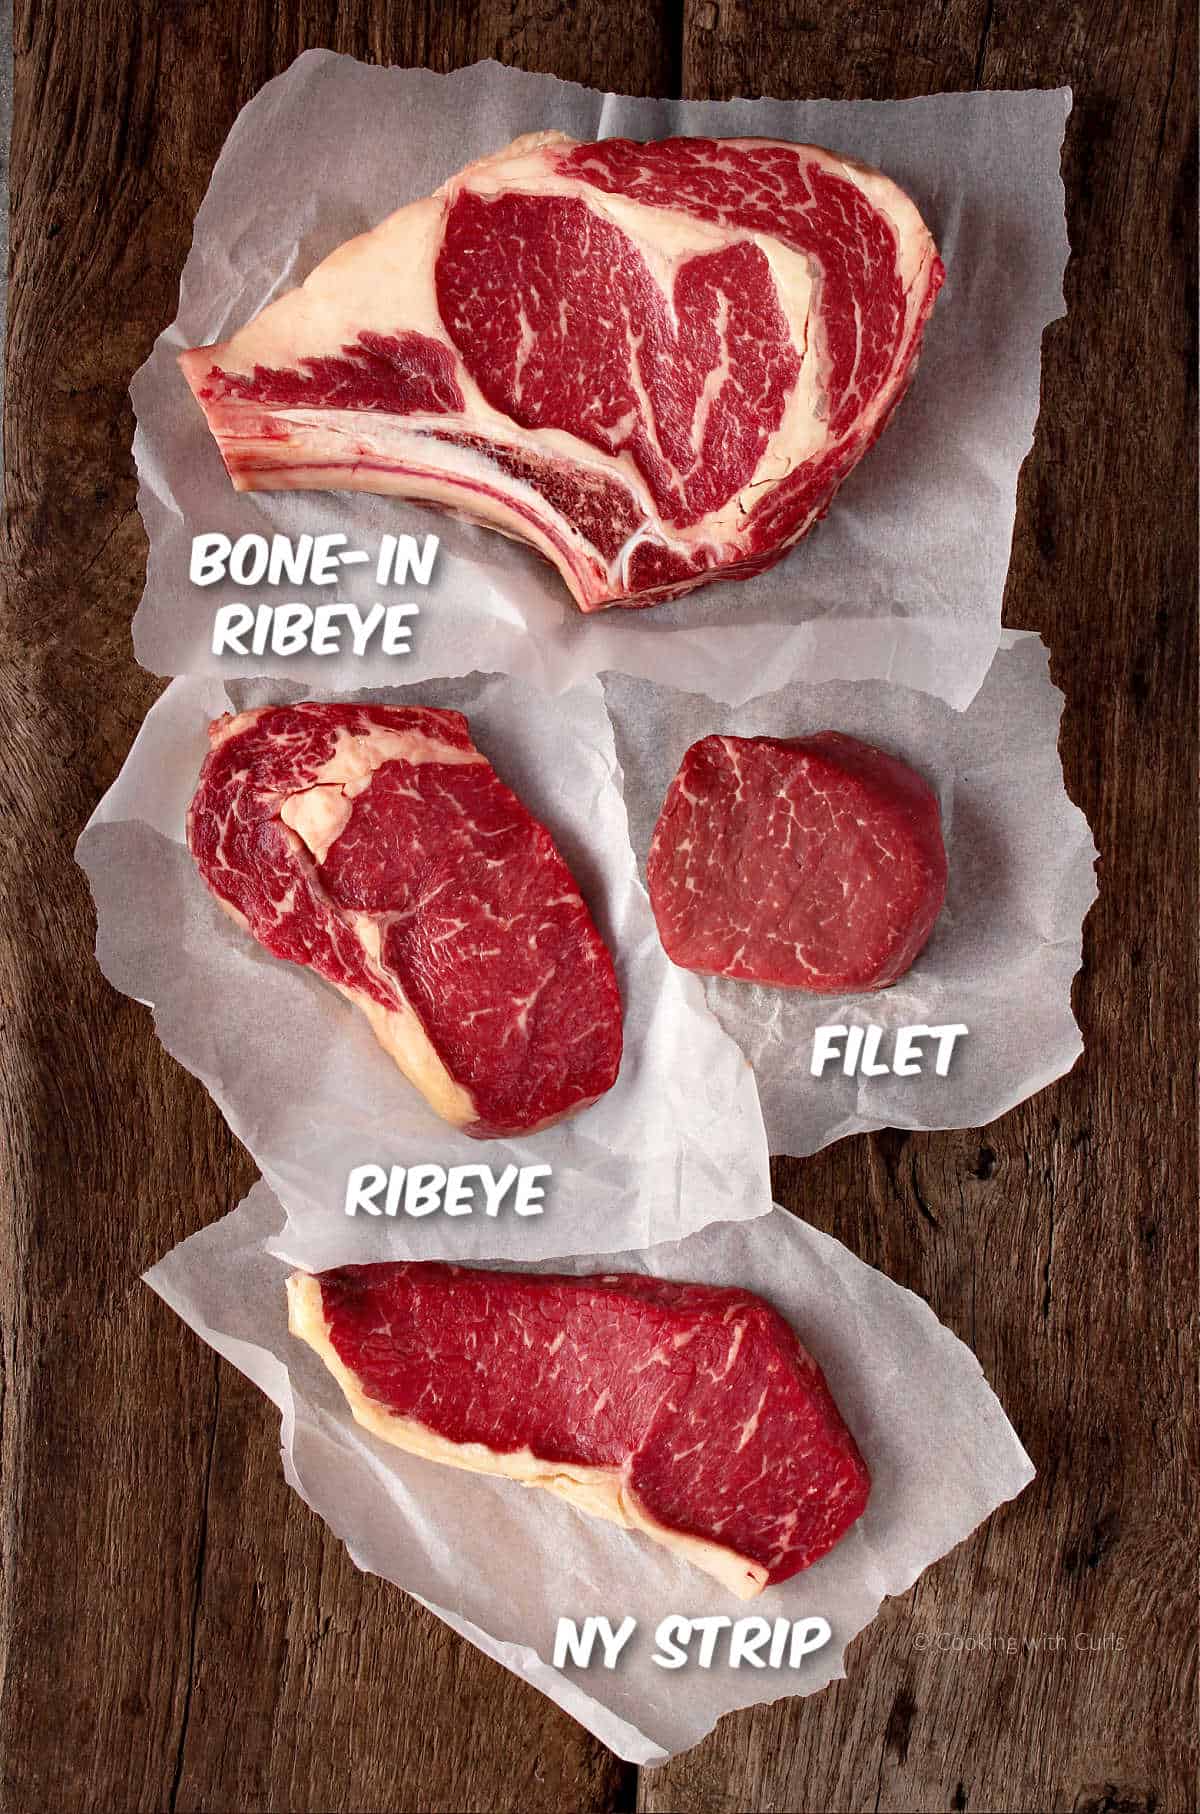 Raw ribeye, bone-in ribeye, filet, and NY strip steaks on white paper.